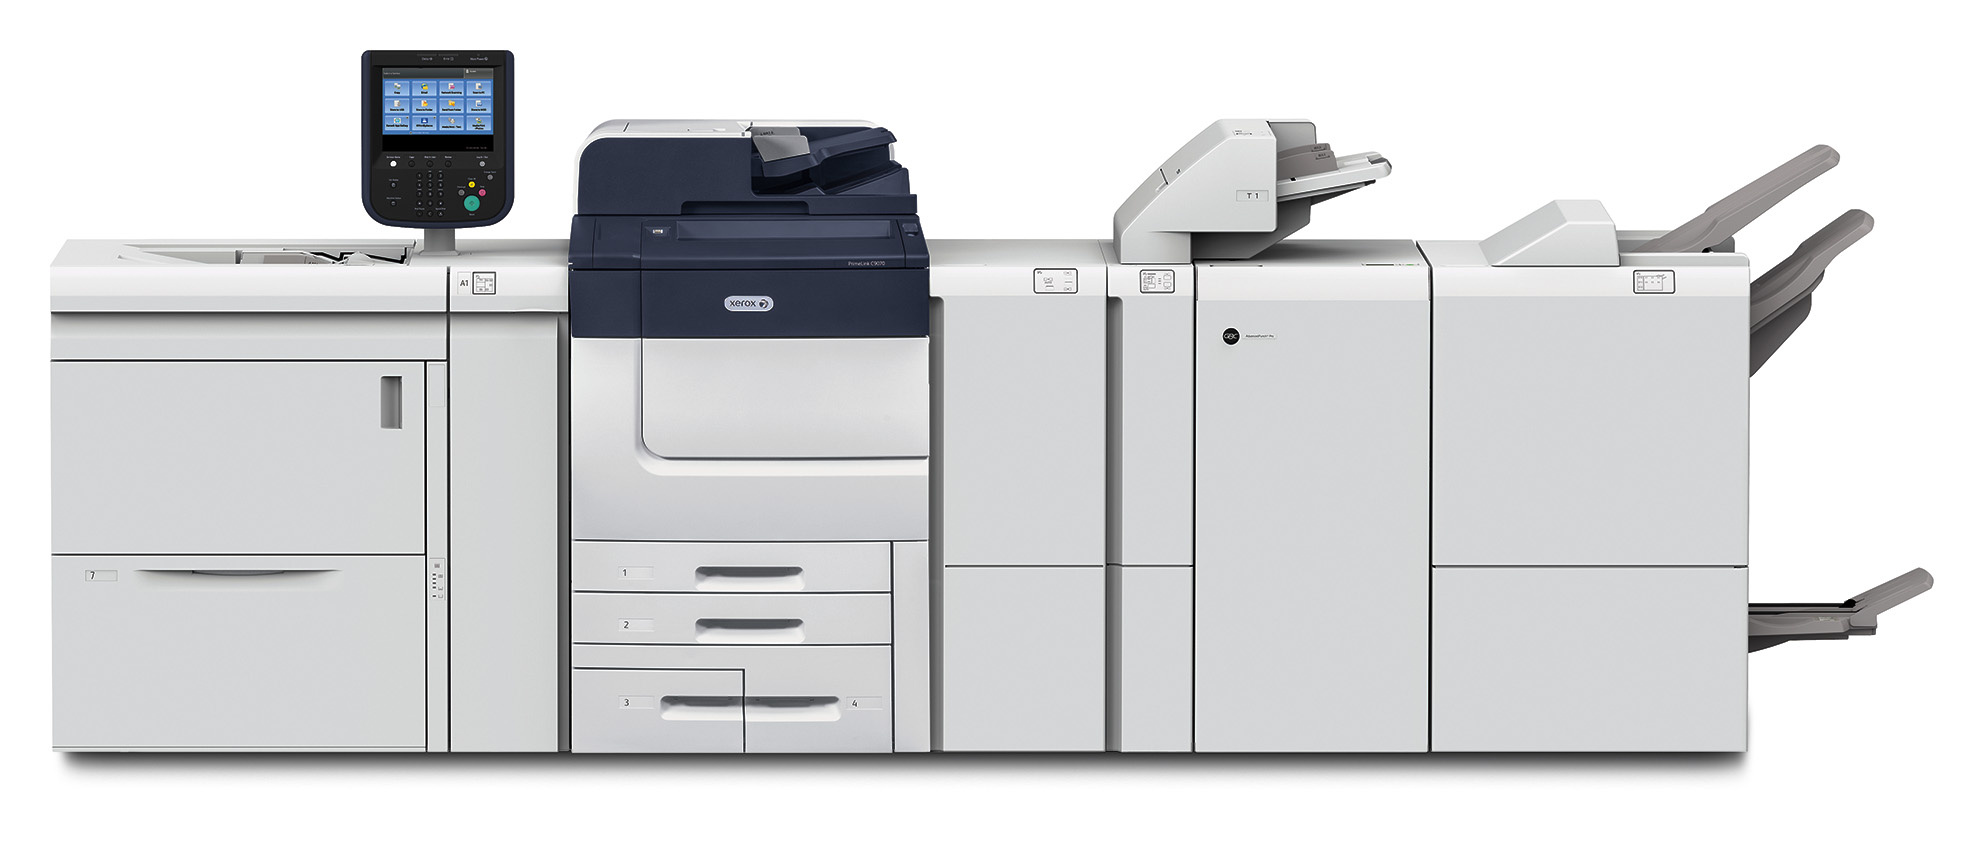 Xerox Primelink C9065/C9070 printer